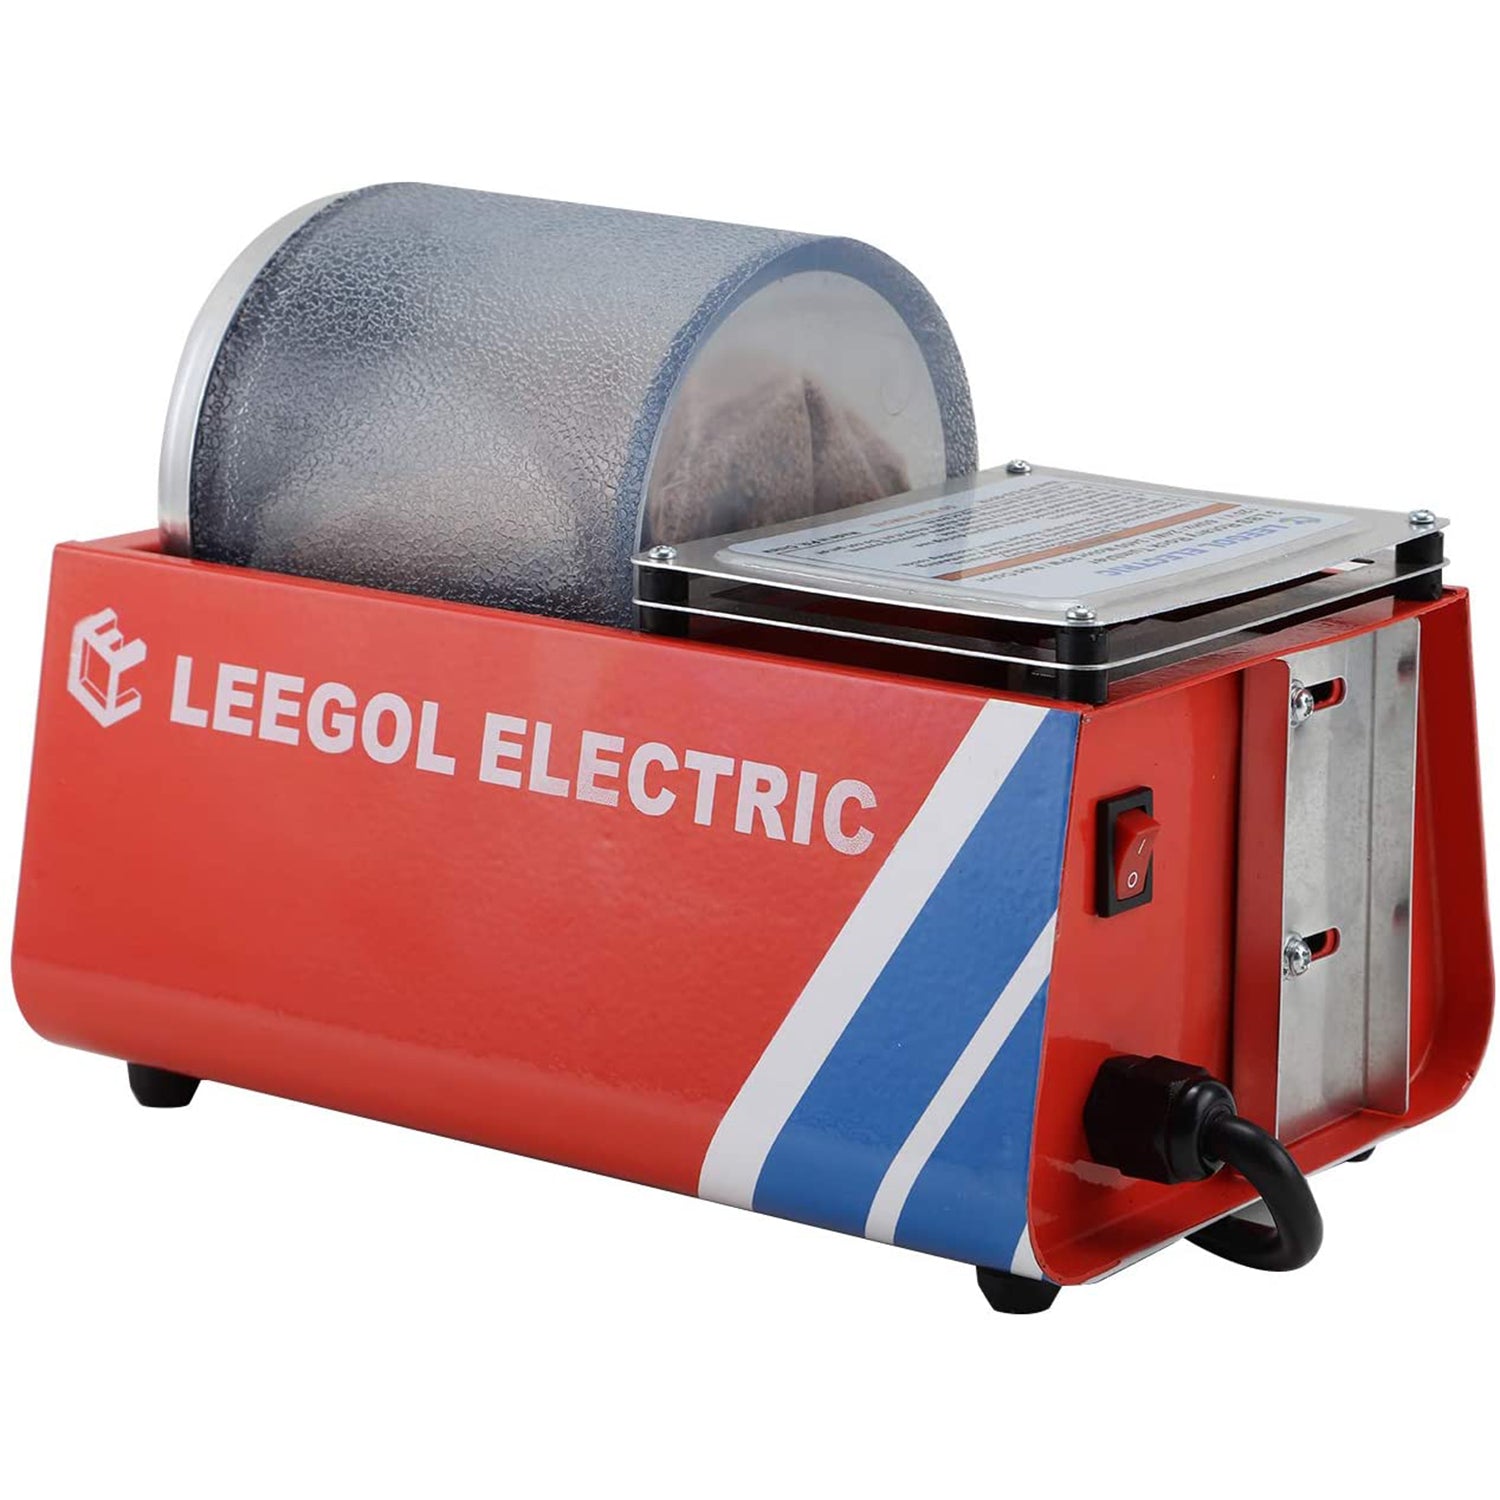 Leegol Electric 5LB Vibratory Tumbler Case Tumbler Polishing Small Metal  Parts 